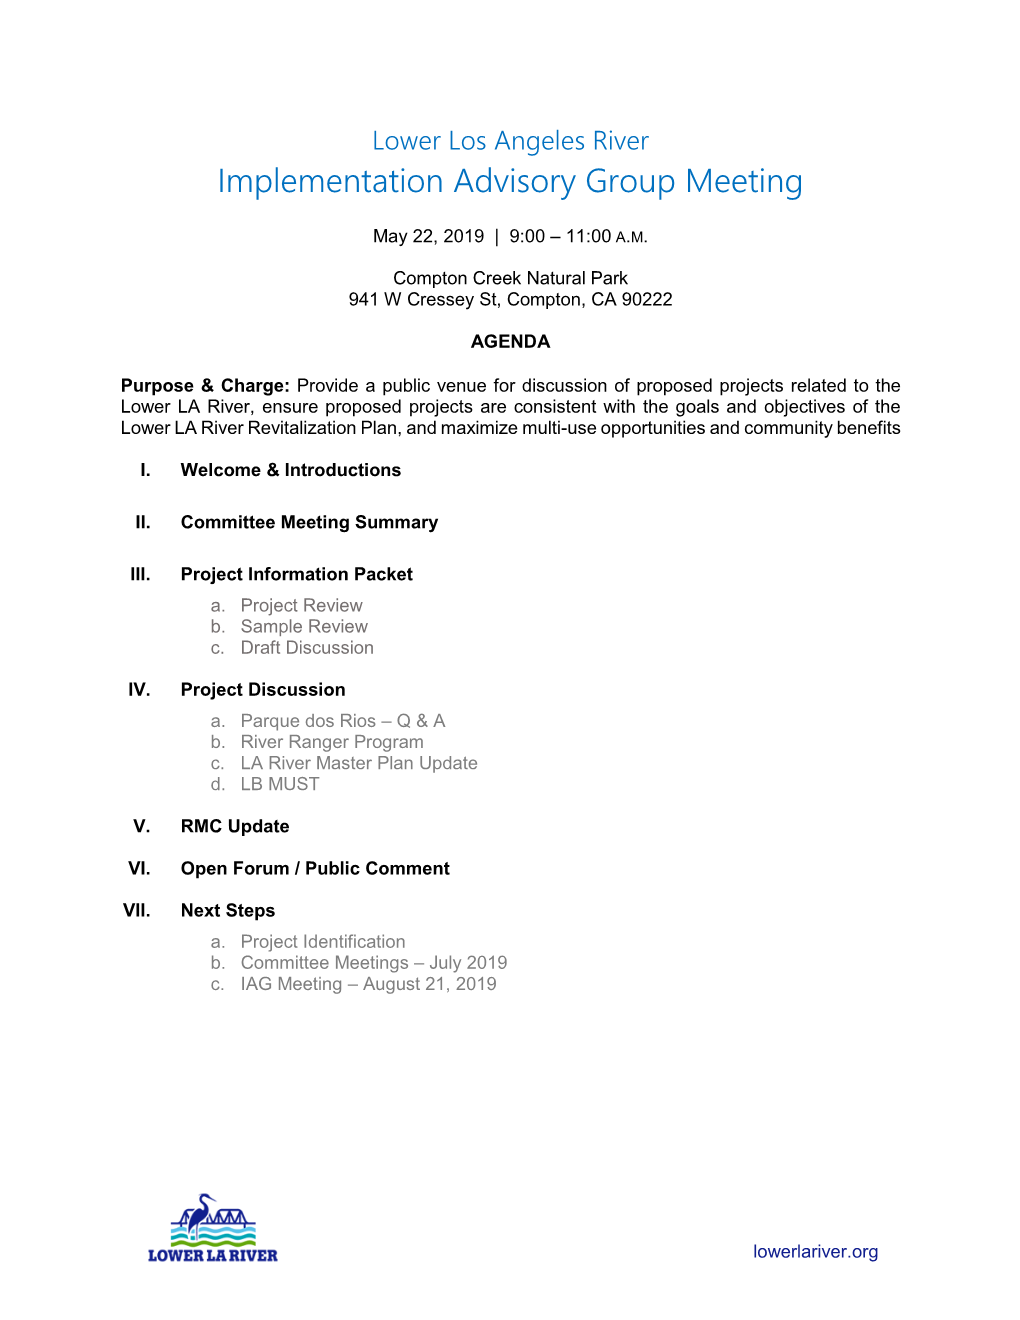 IAG Meeting – August 21, 2019